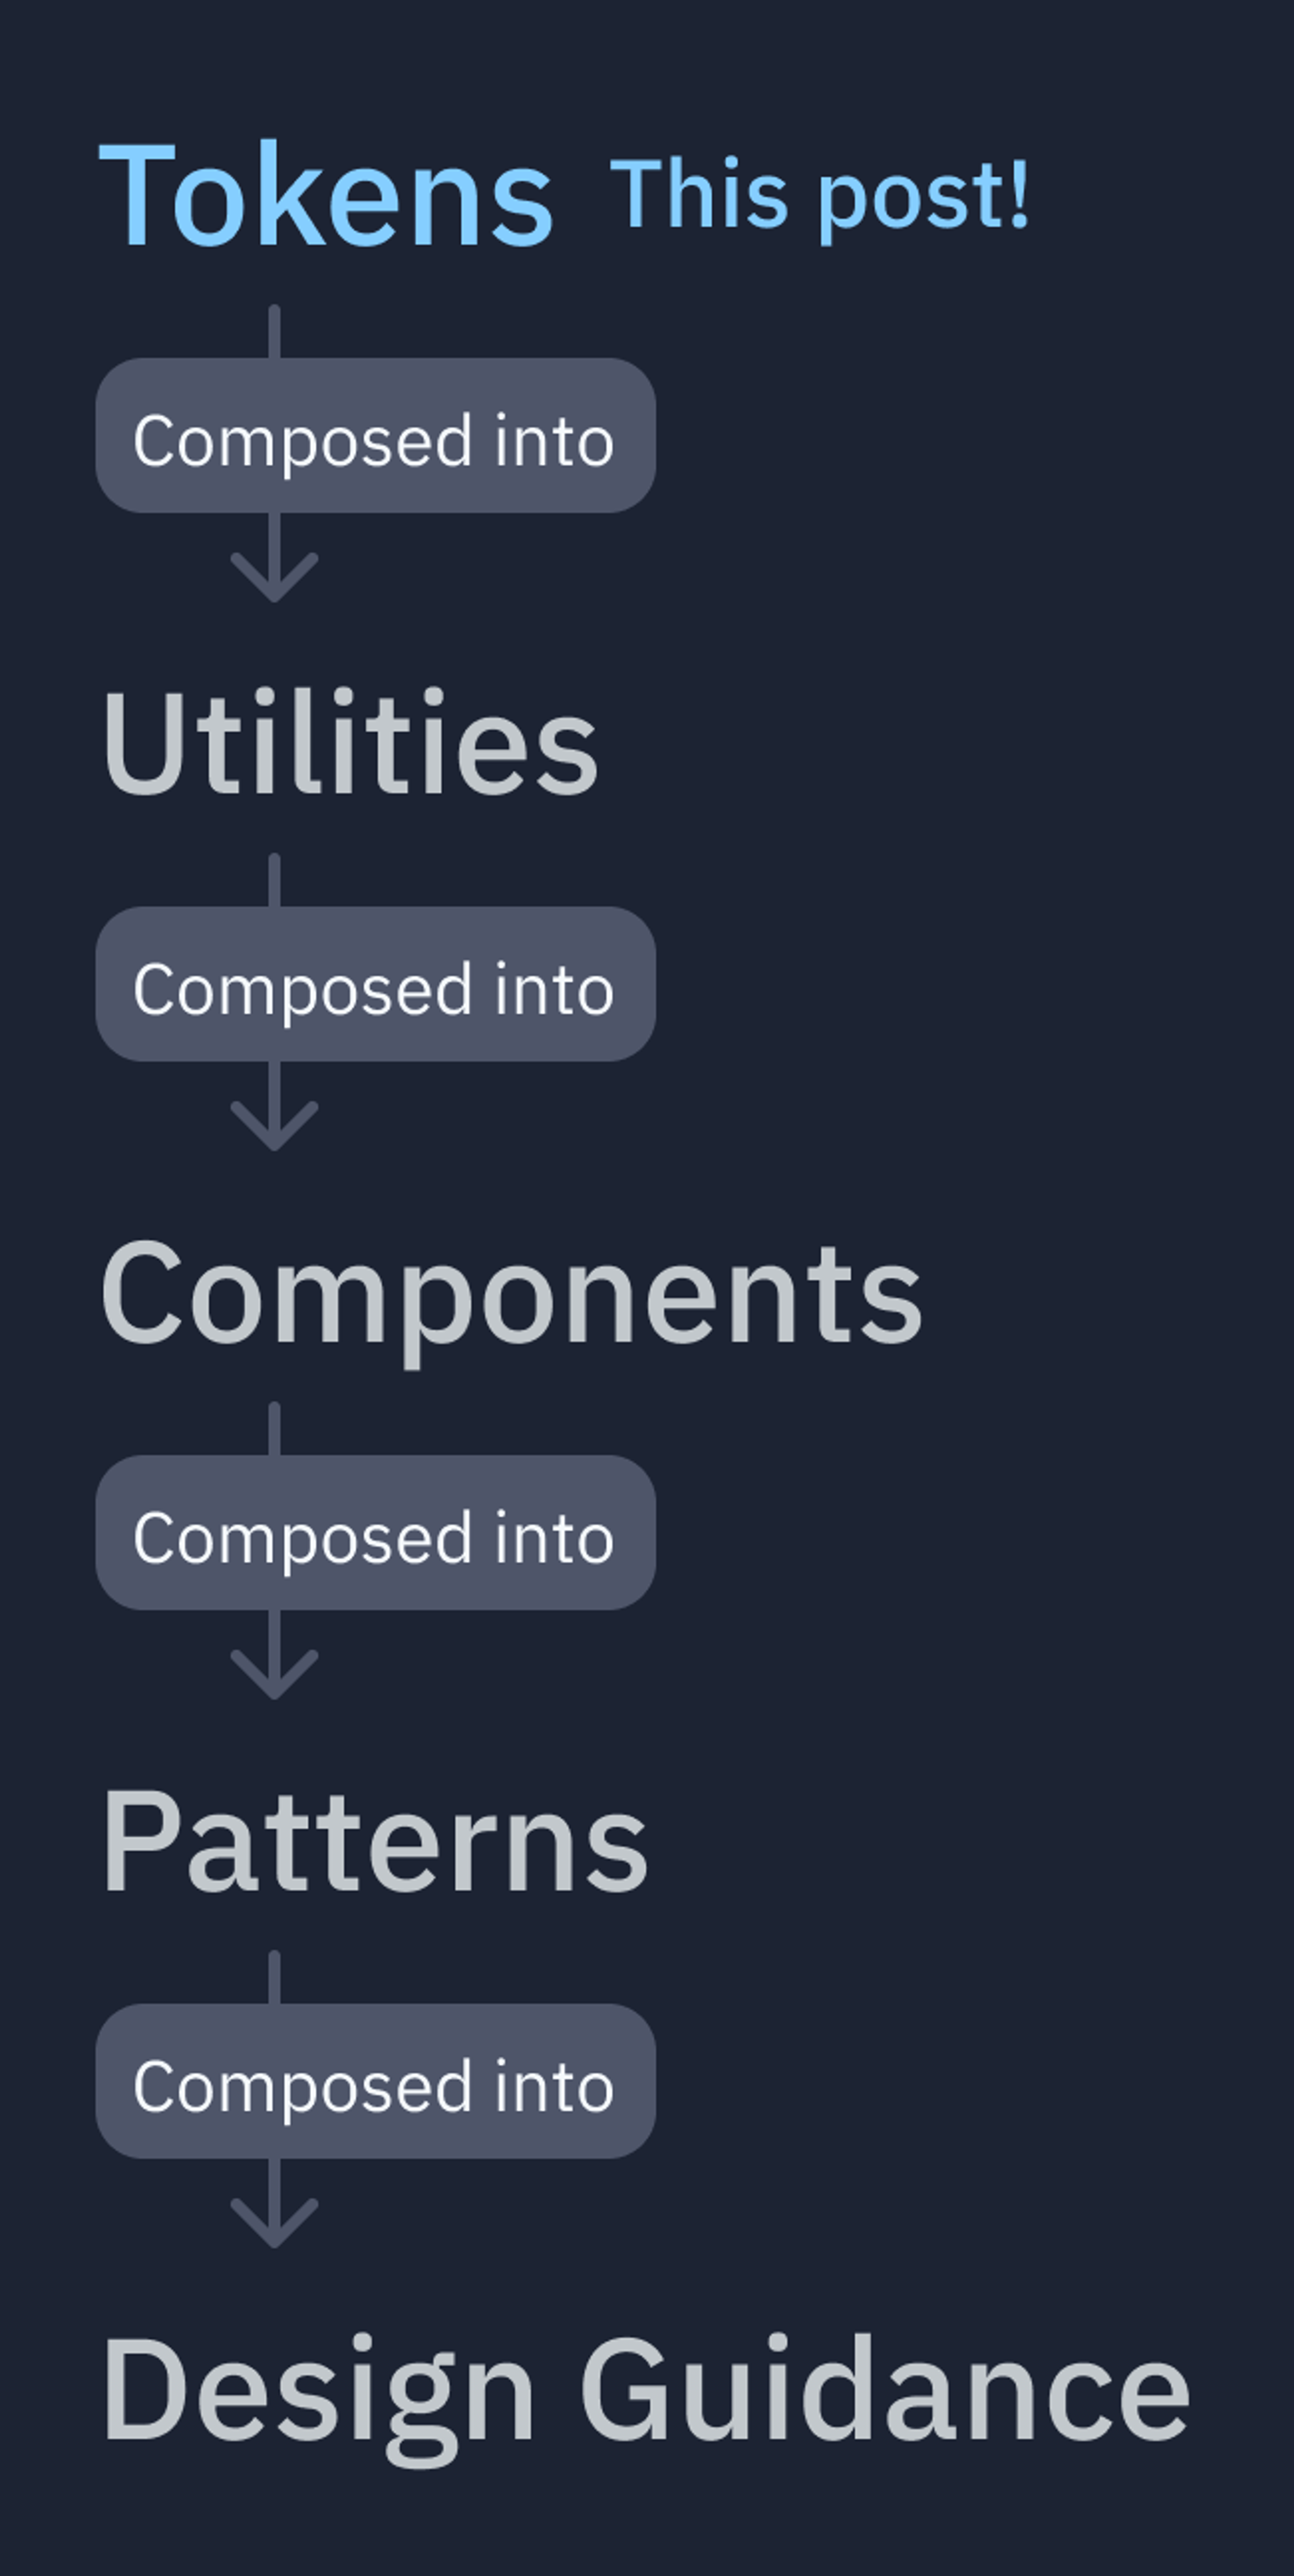 RUI heirarchy: Tokens are composed into Utilities are composed into Components are composed into Patterns are composed into Design Guidance